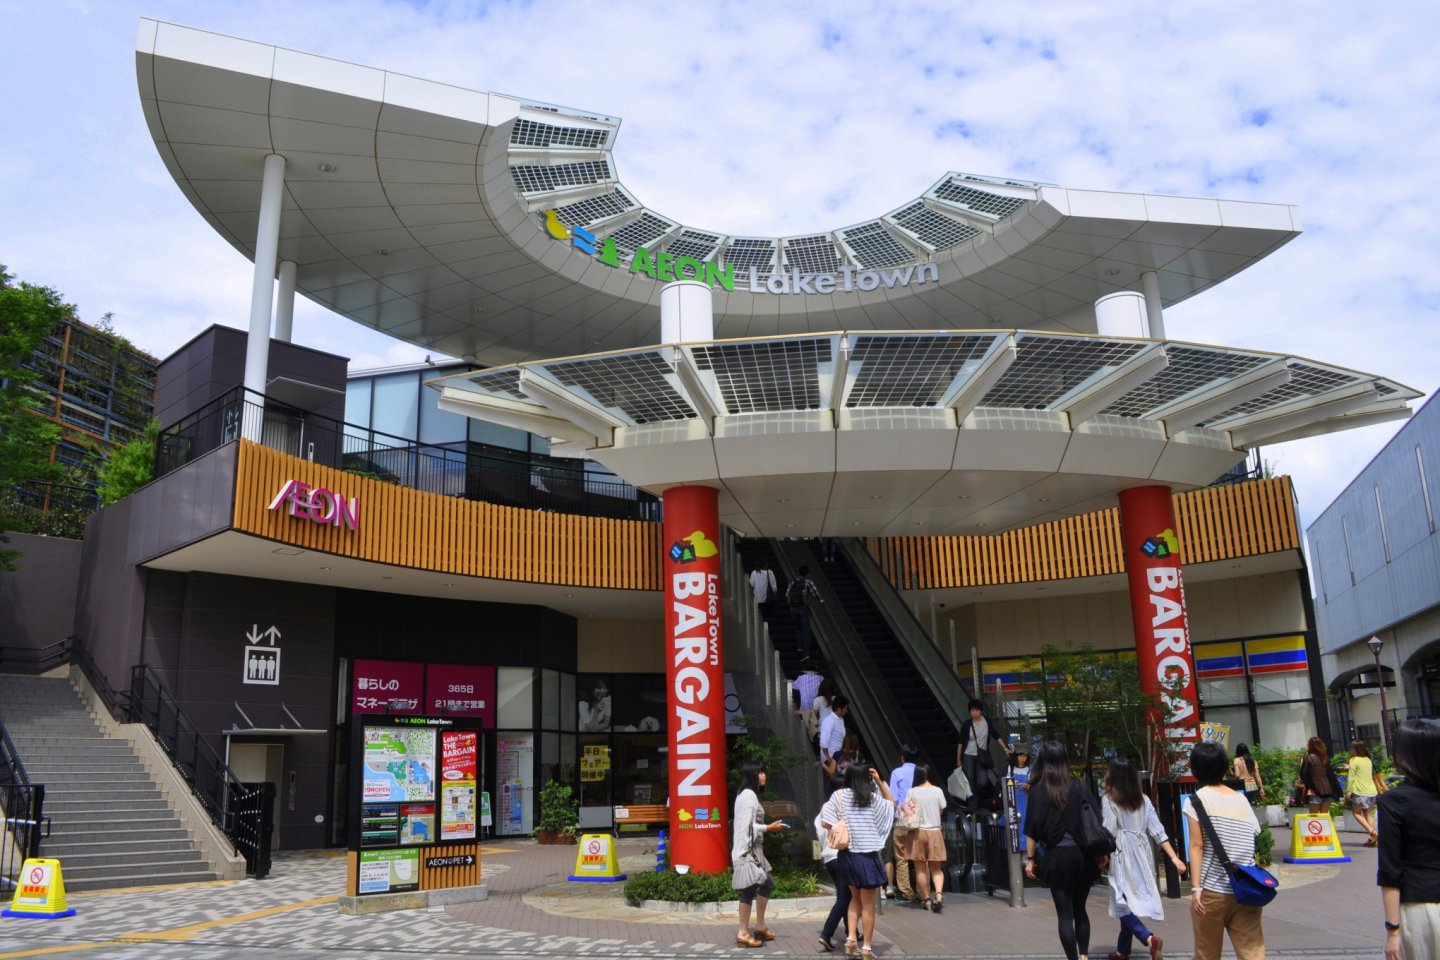 The entrance to Kaze from the Koshigaya-Laketown station